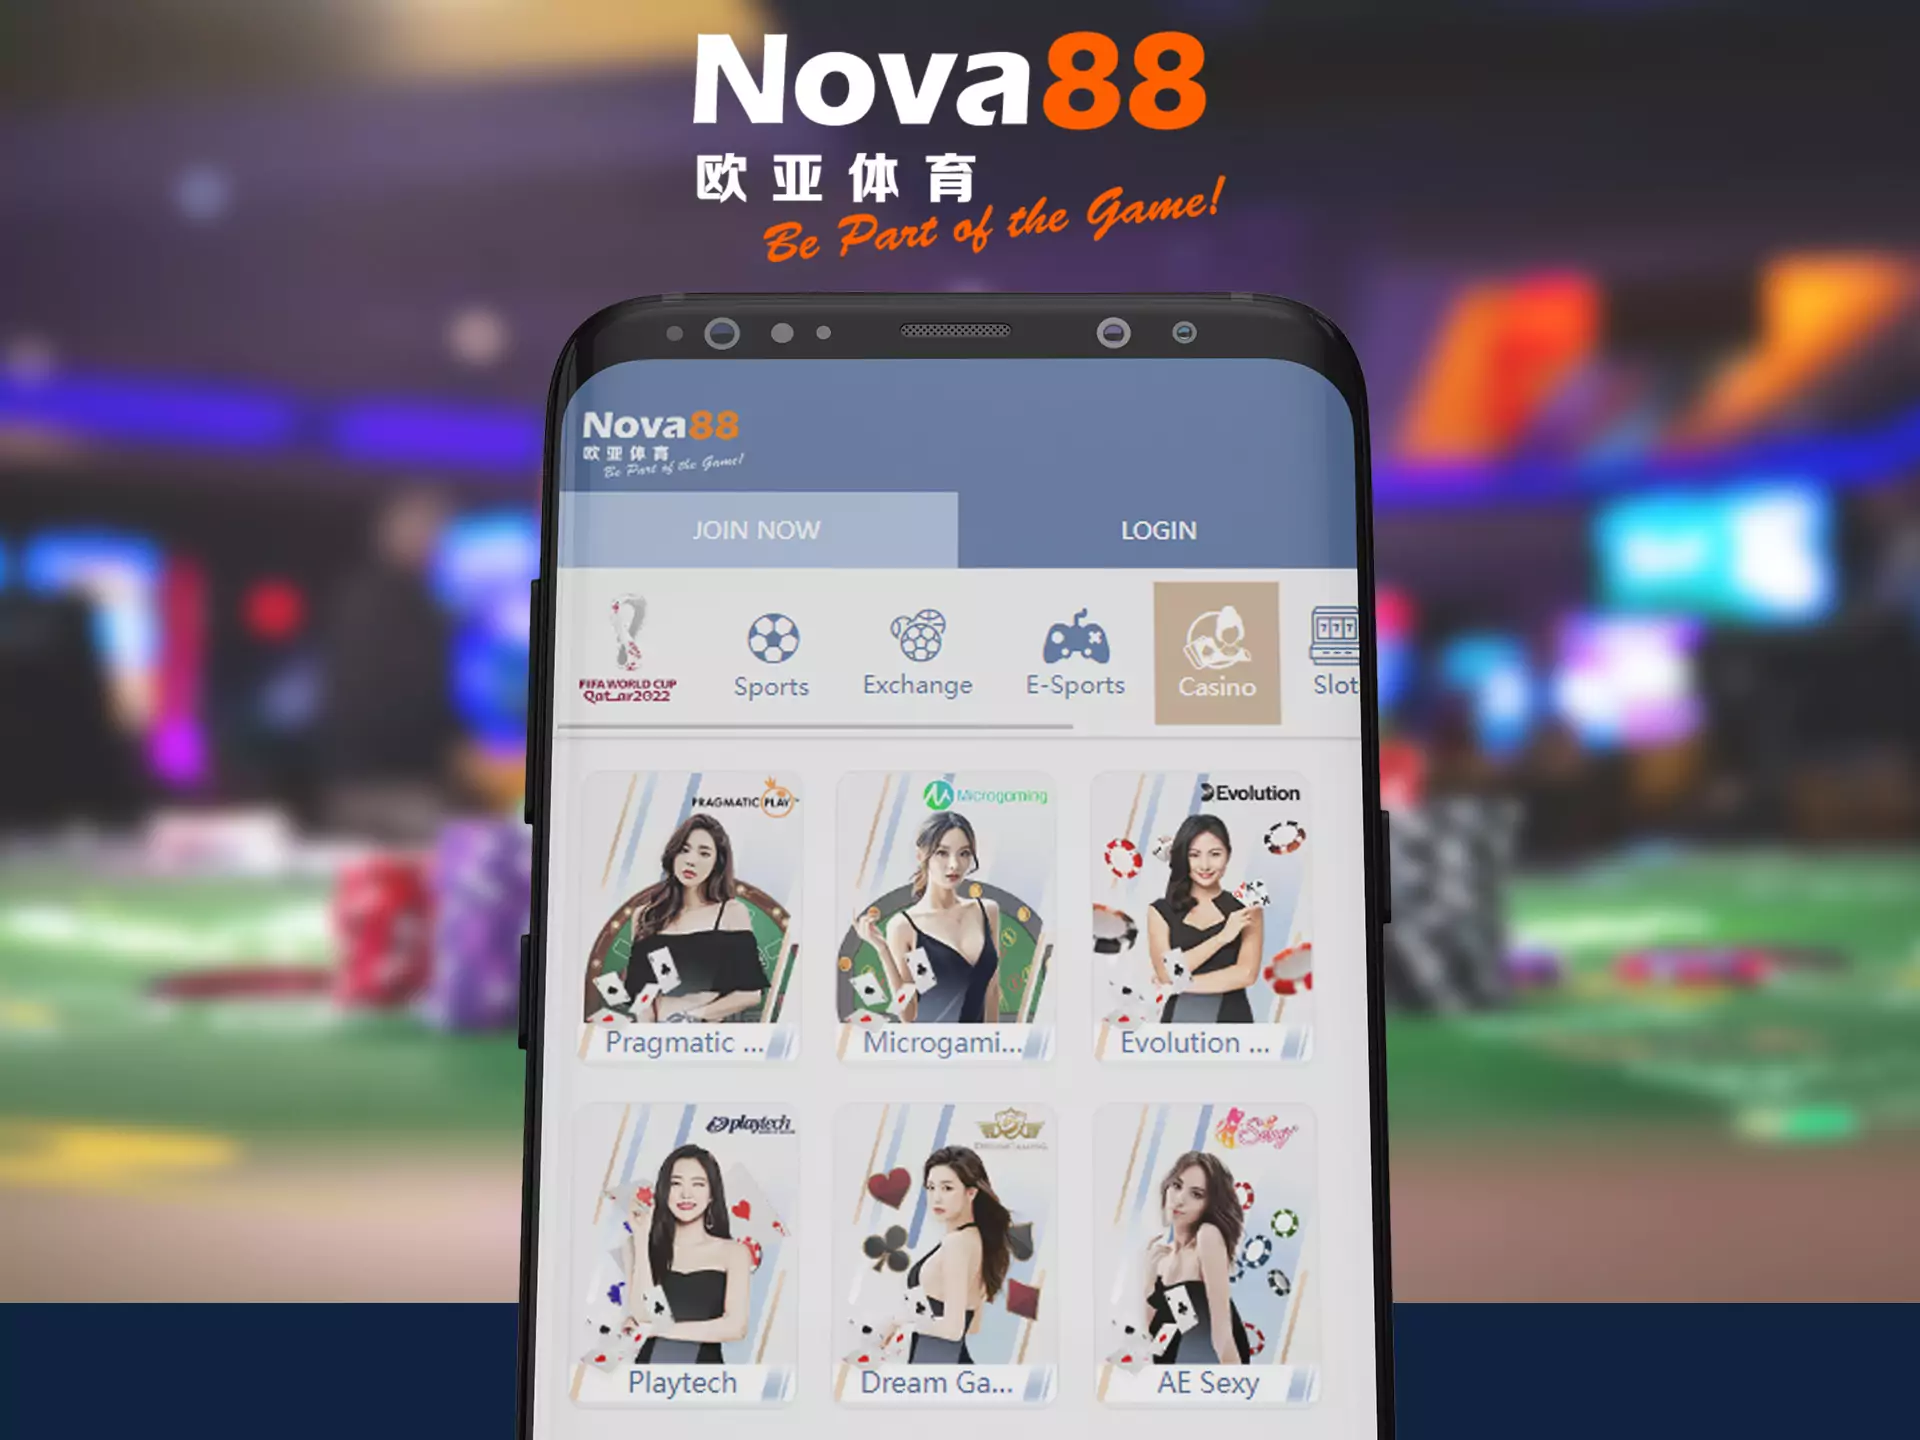 Nova88 app is very useful in casino games.